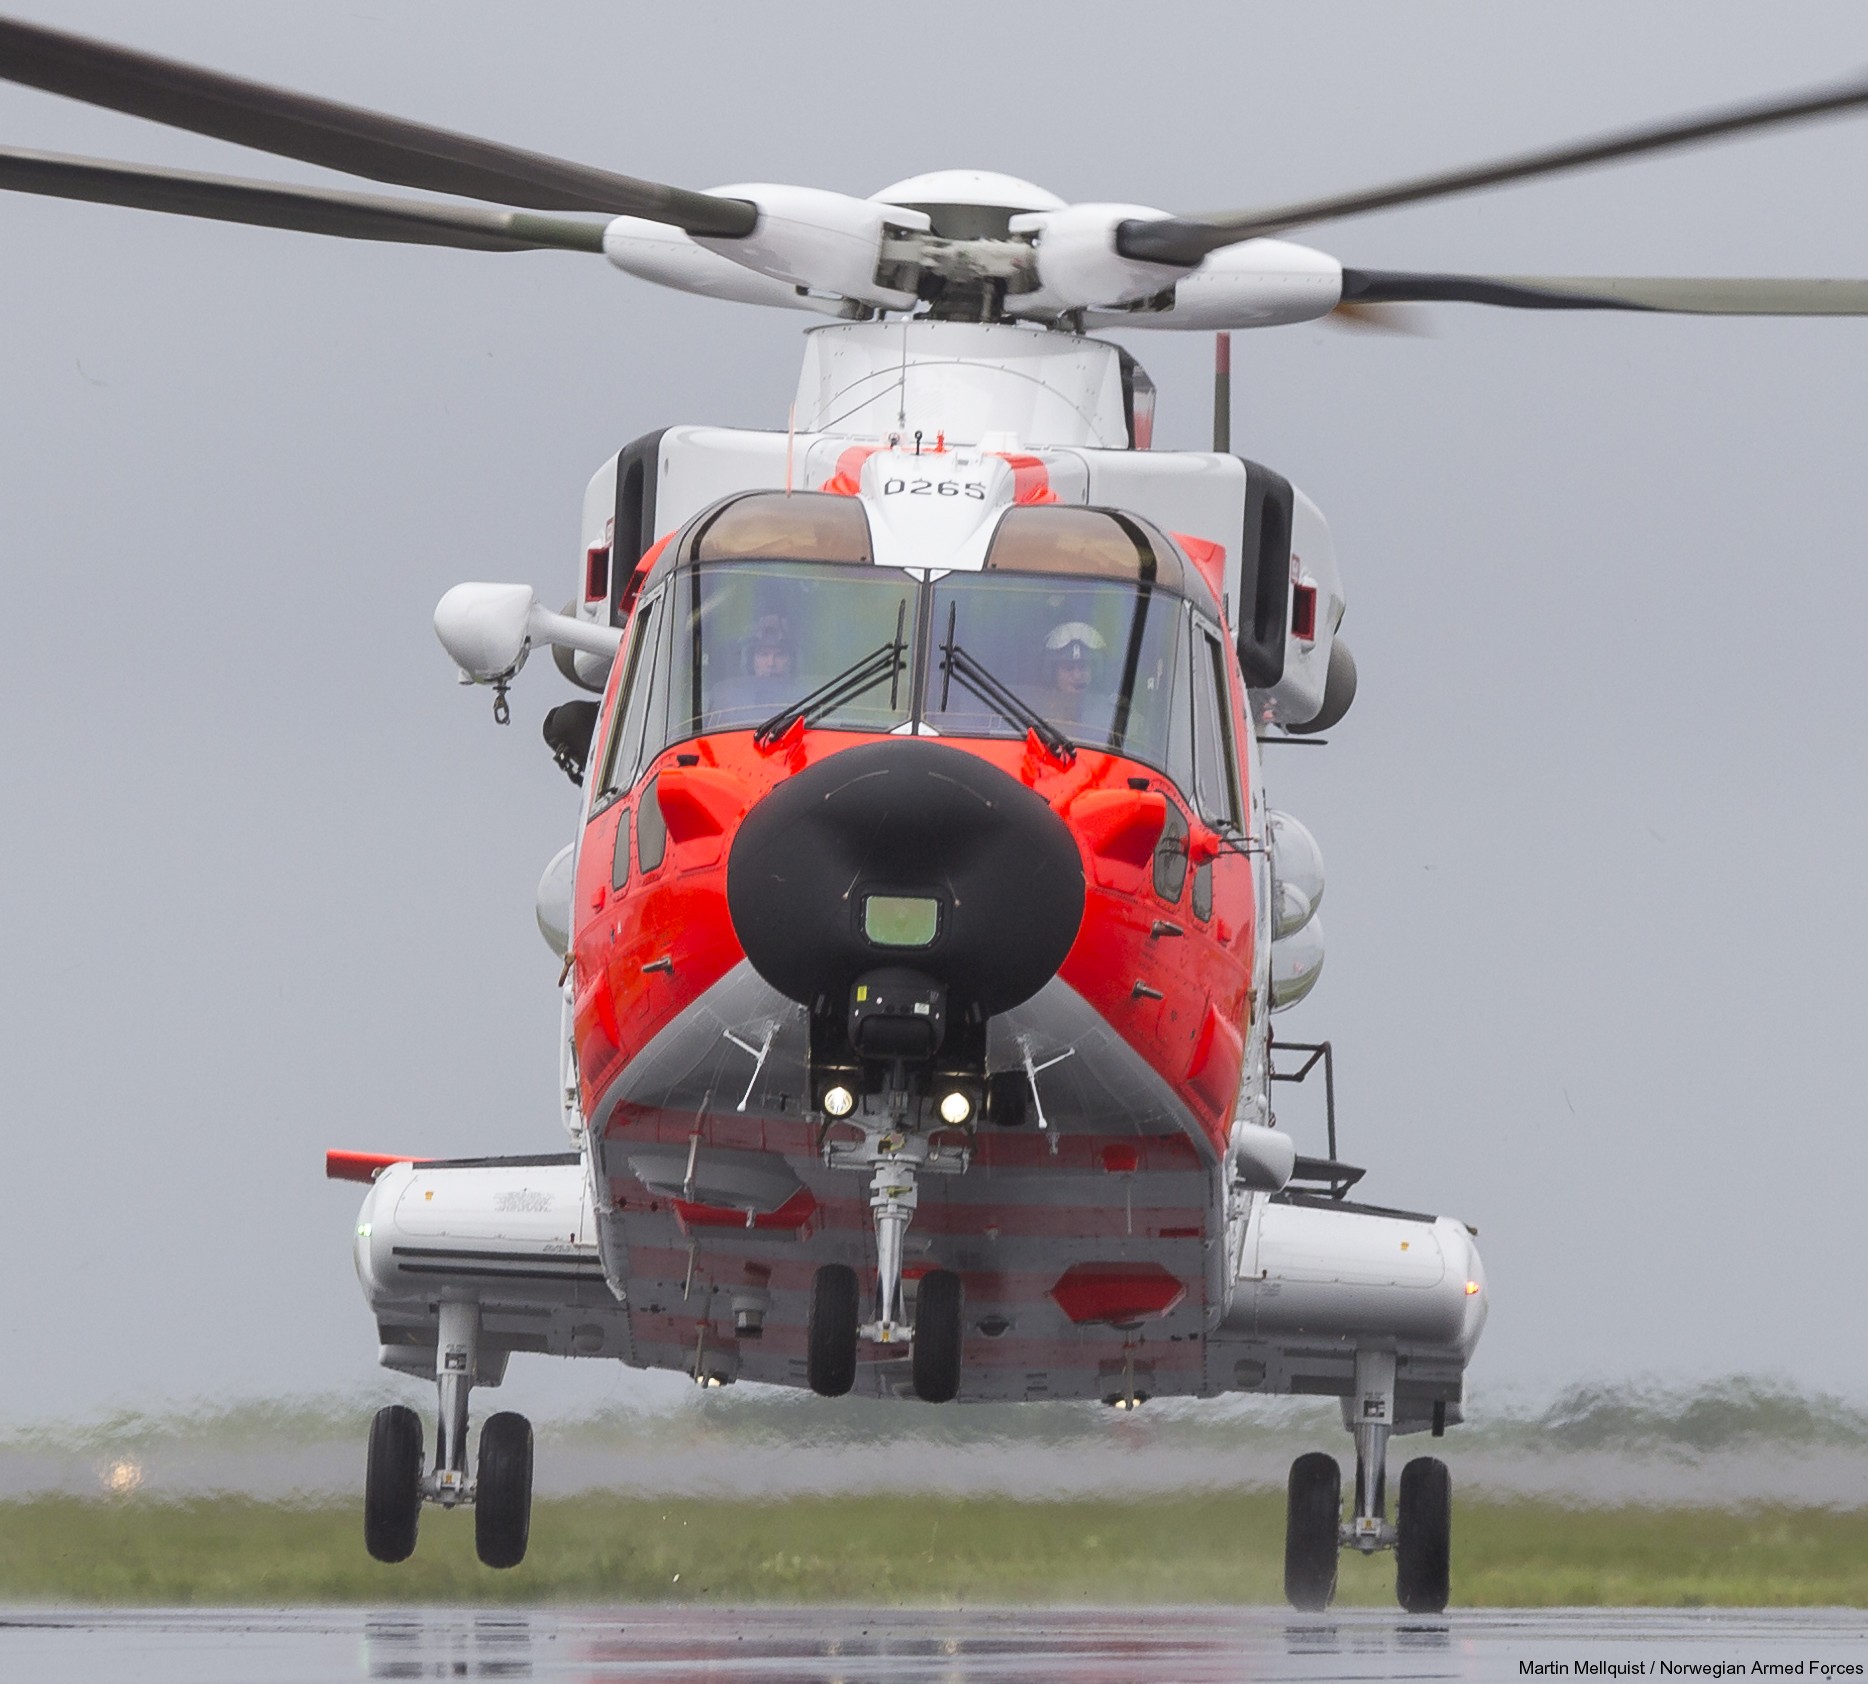 agusta westland aw101 rescue helicopter royal norwegian air force luftforsvaret sar queen 0265 09